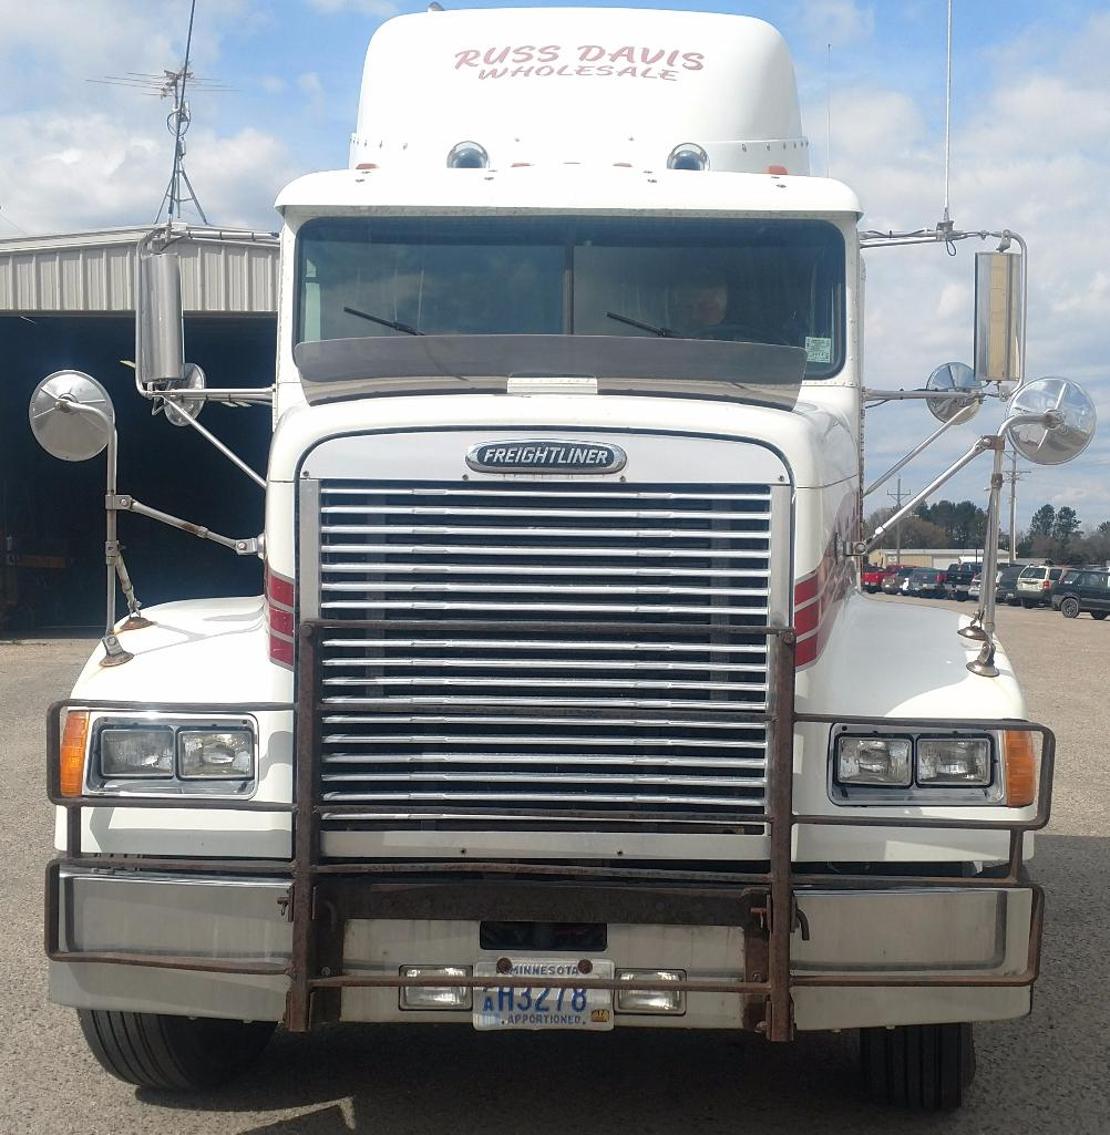 Russ Davis Truck Inventory Reduction